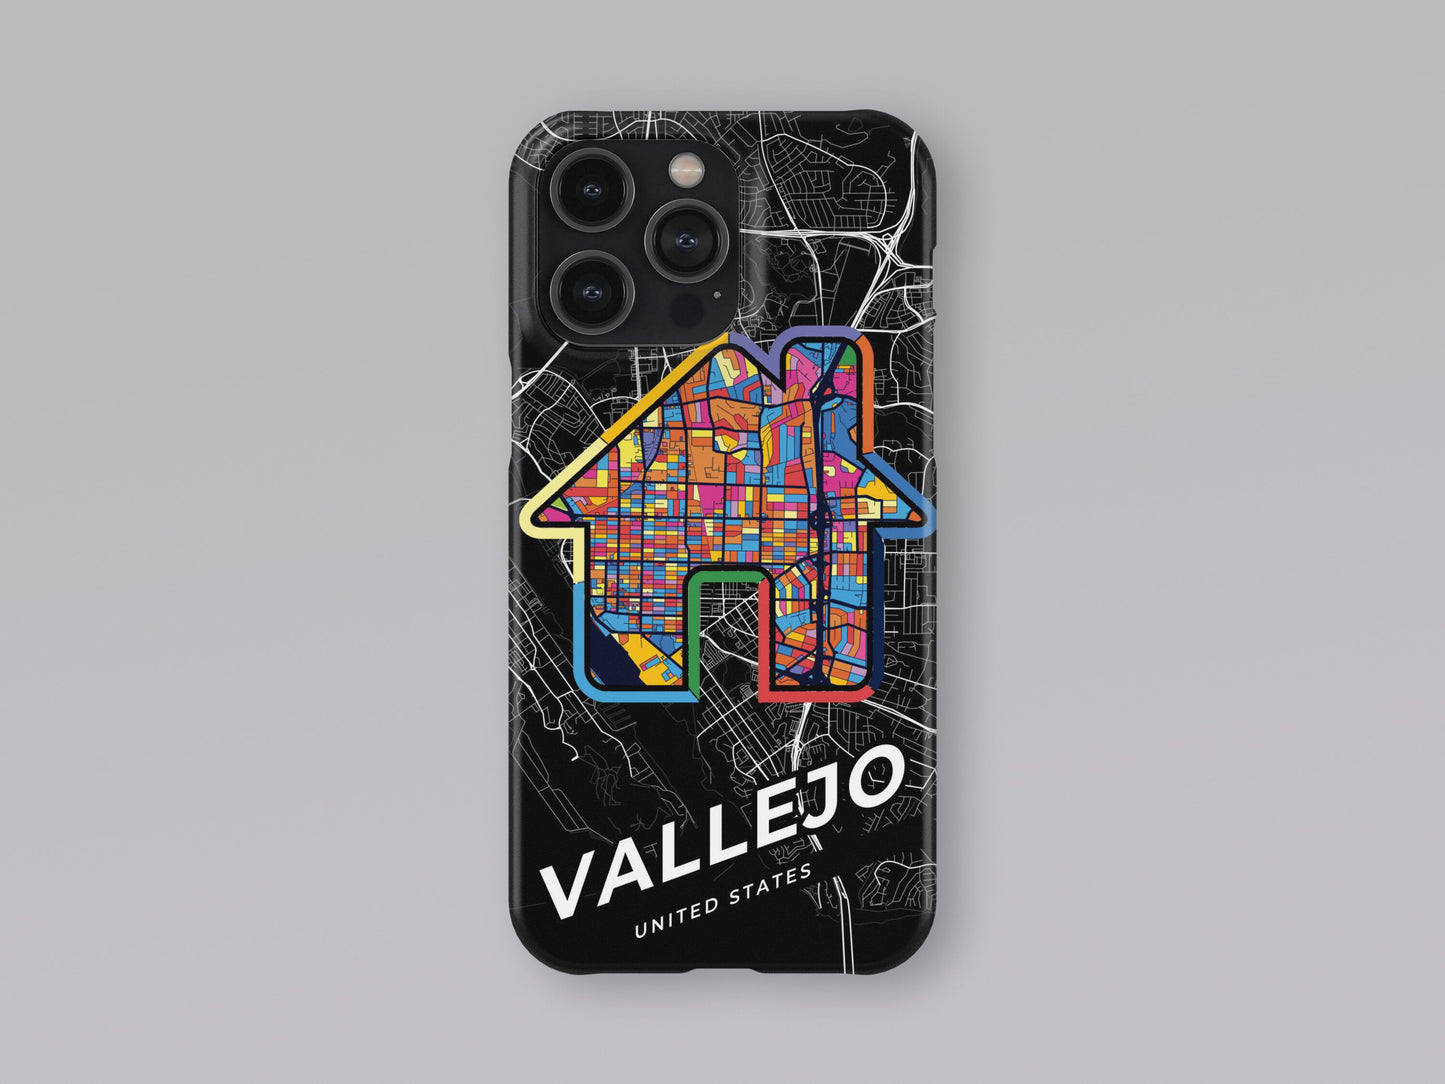 Vallejo California slim phone case with colorful icon 3